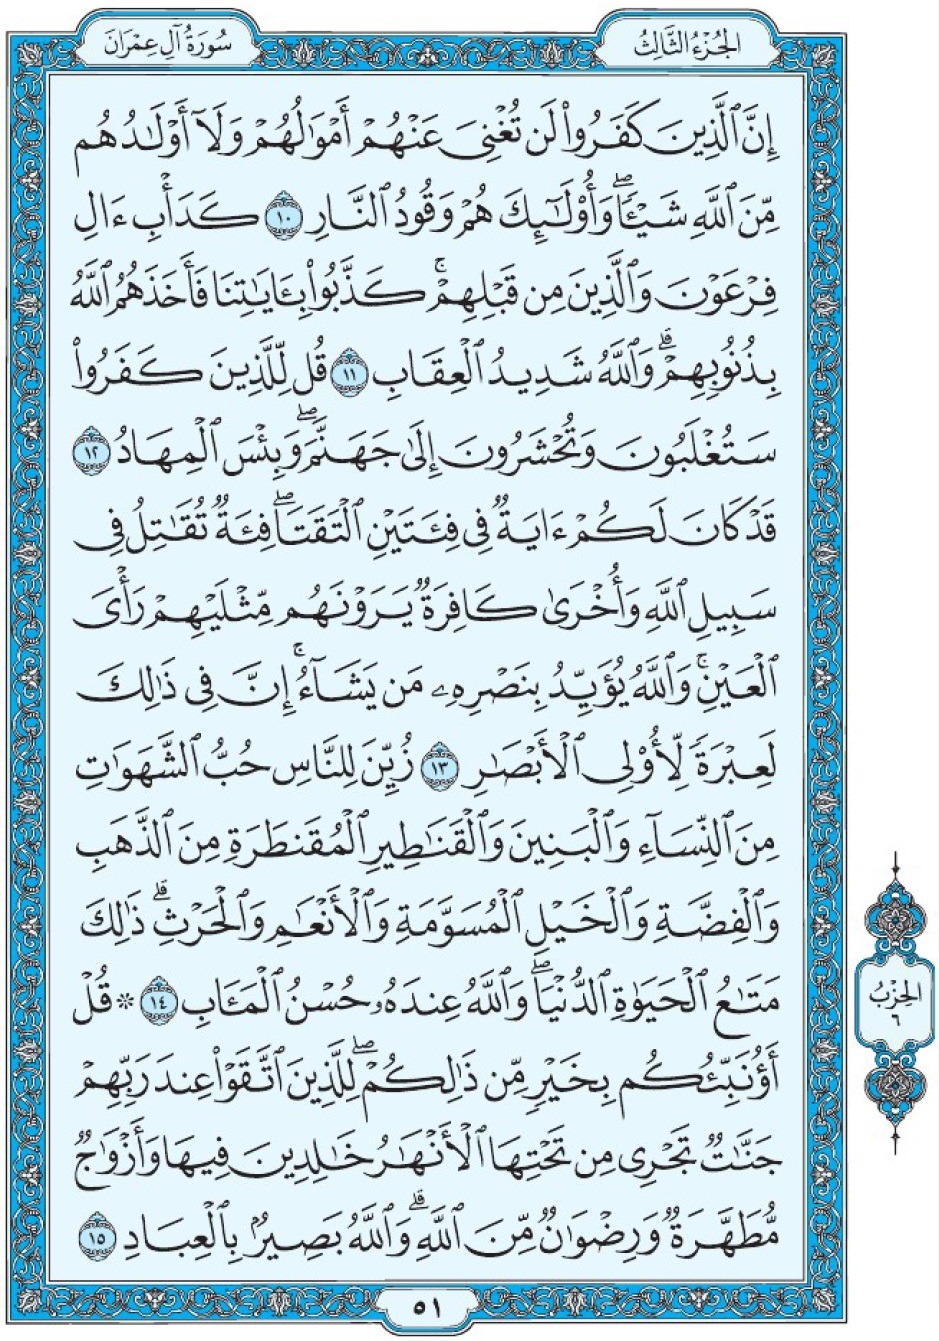 Коран Мединский мусхаф страница 51, Али Имран, аят 10-15